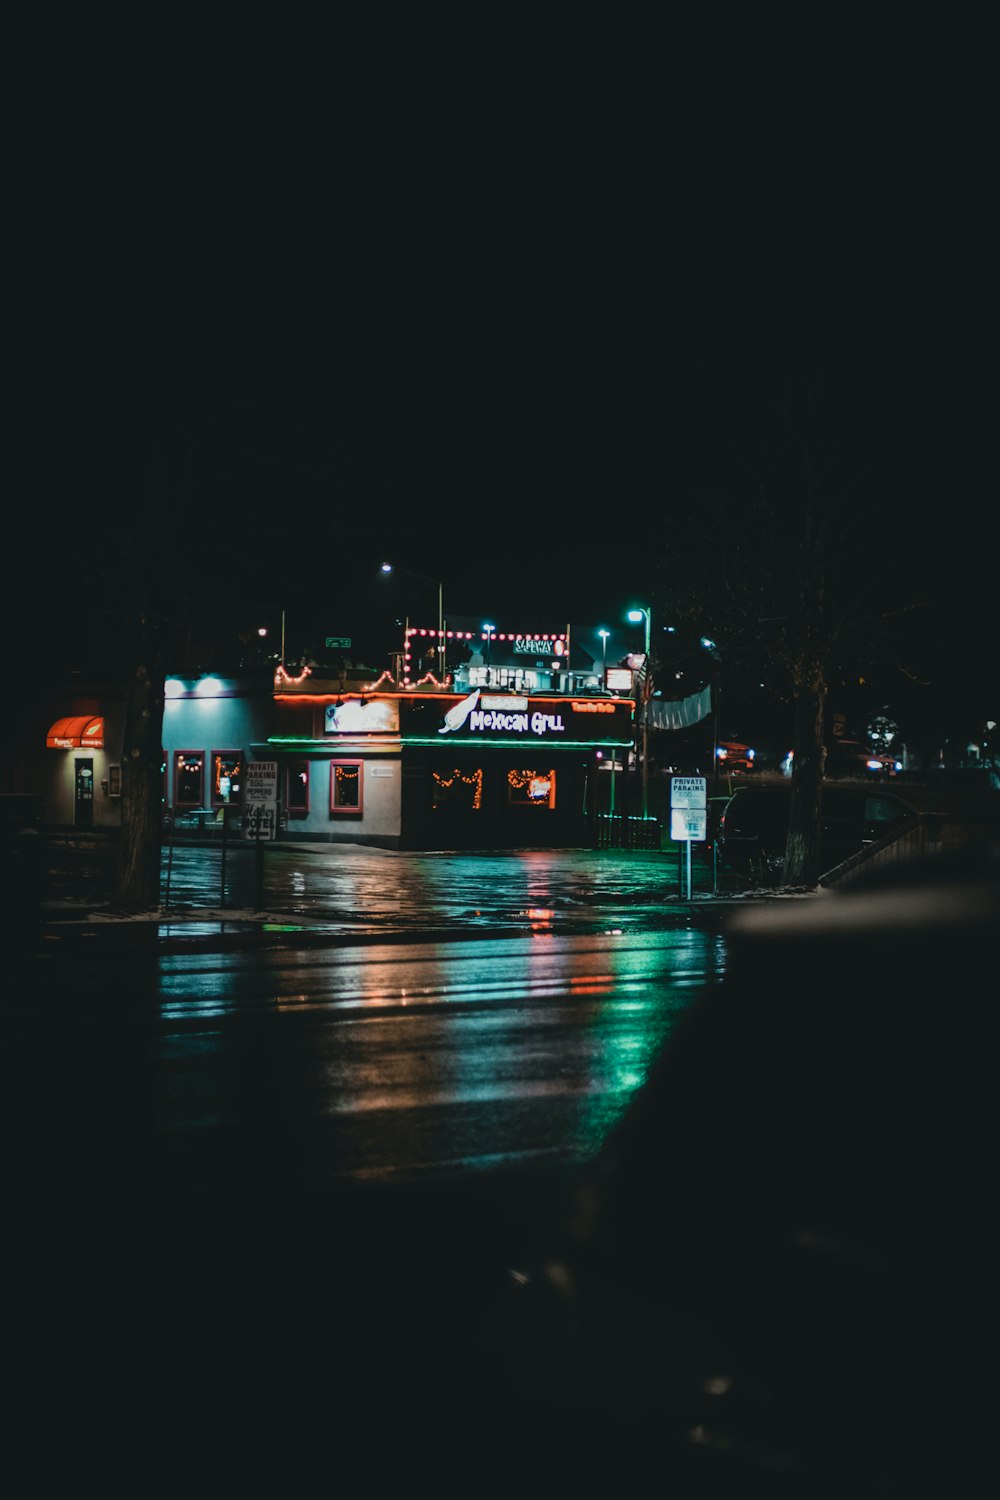 a dark city street at night with lights on